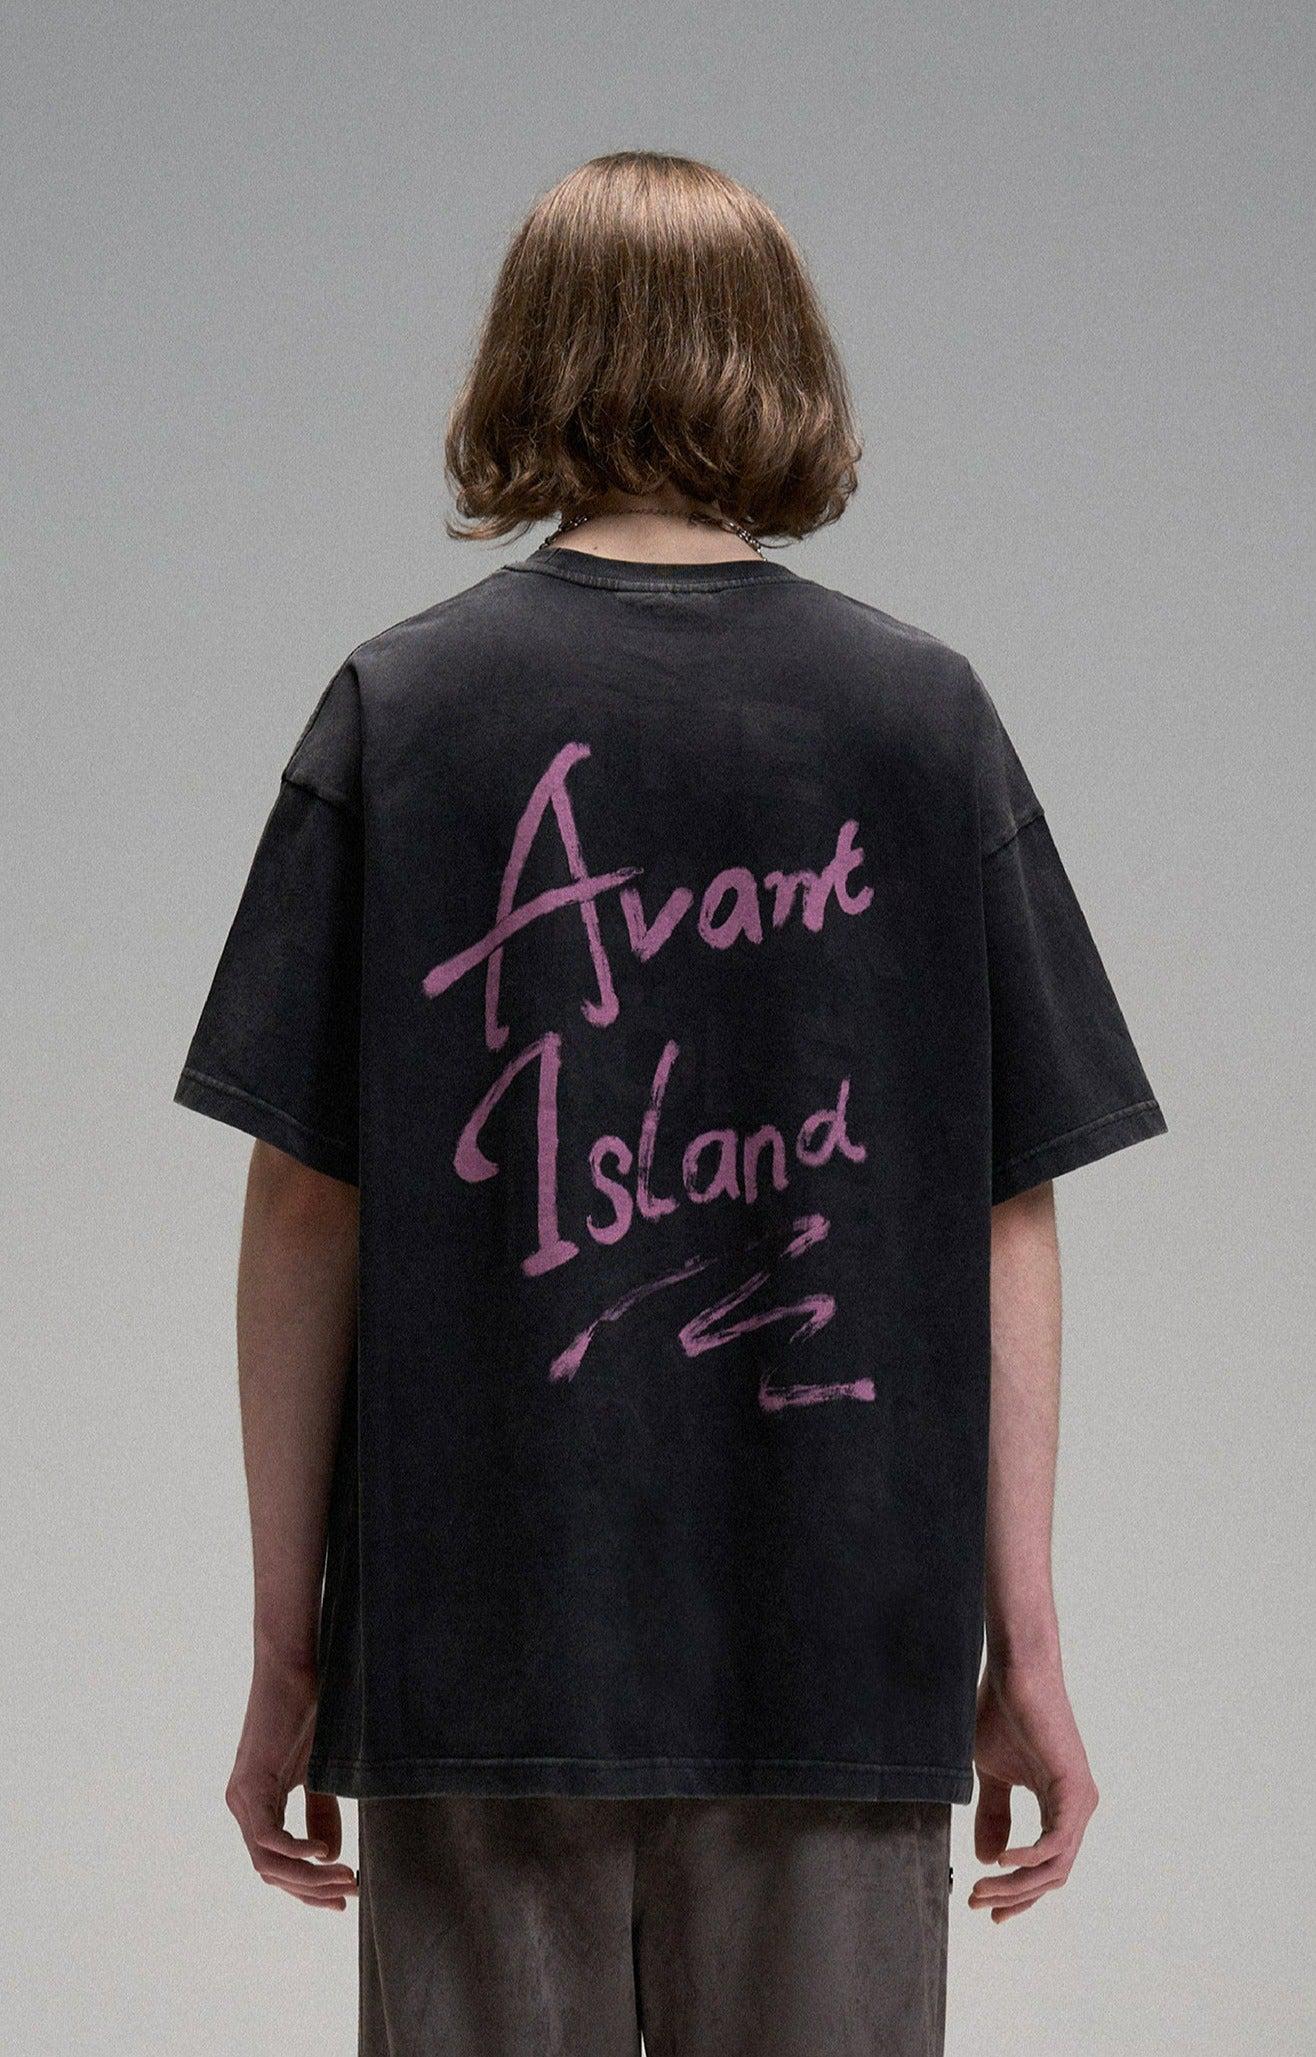 Avant Island Graphic T-Shirt Korean Street Fashion T-Shirt By Lost CTRL Shop Online at OH Vault